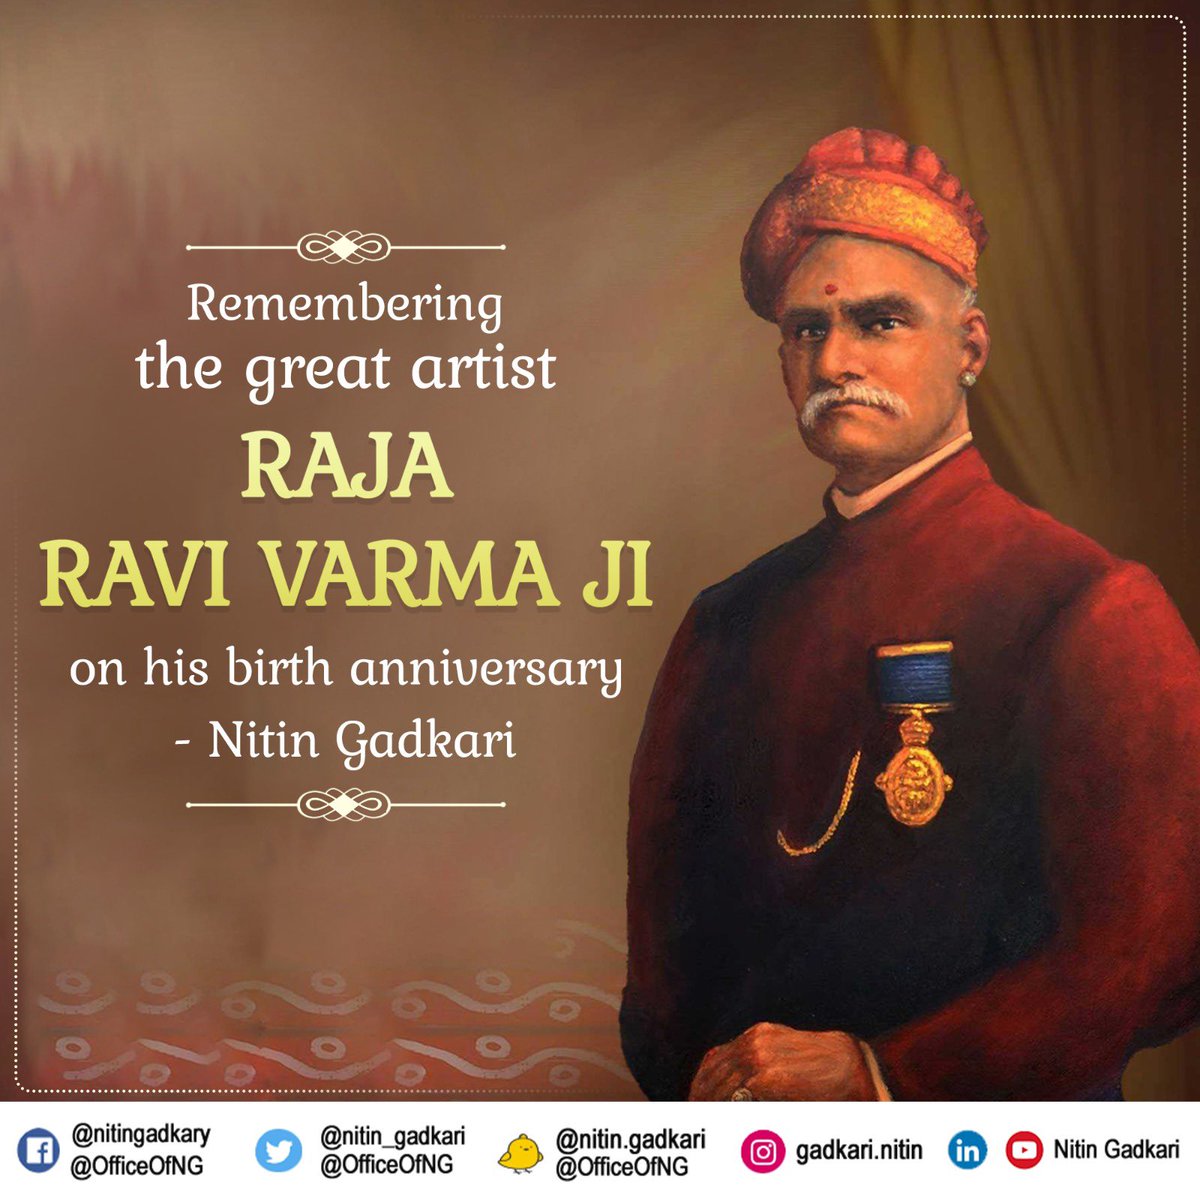 Remembering the great artist Raja Ravi Varma ji on his birth anniversary.